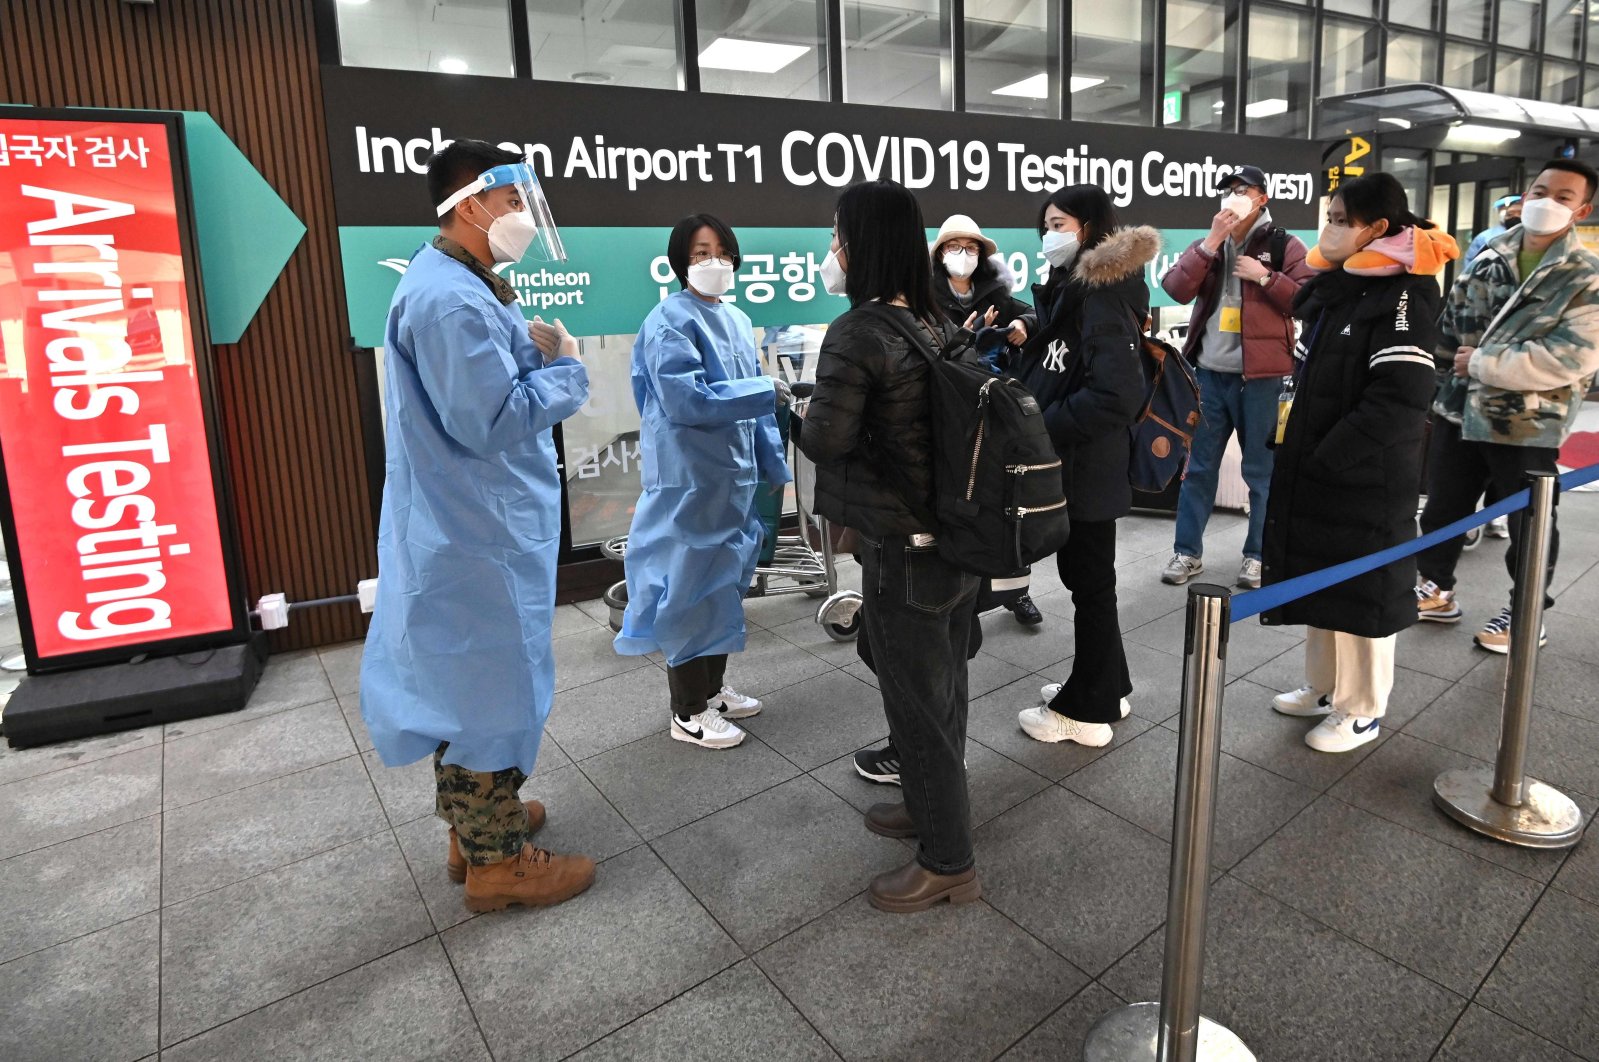 Beijing mengecam aturan COVID pada pelancong China sebagai ‘tidak dapat diterima’